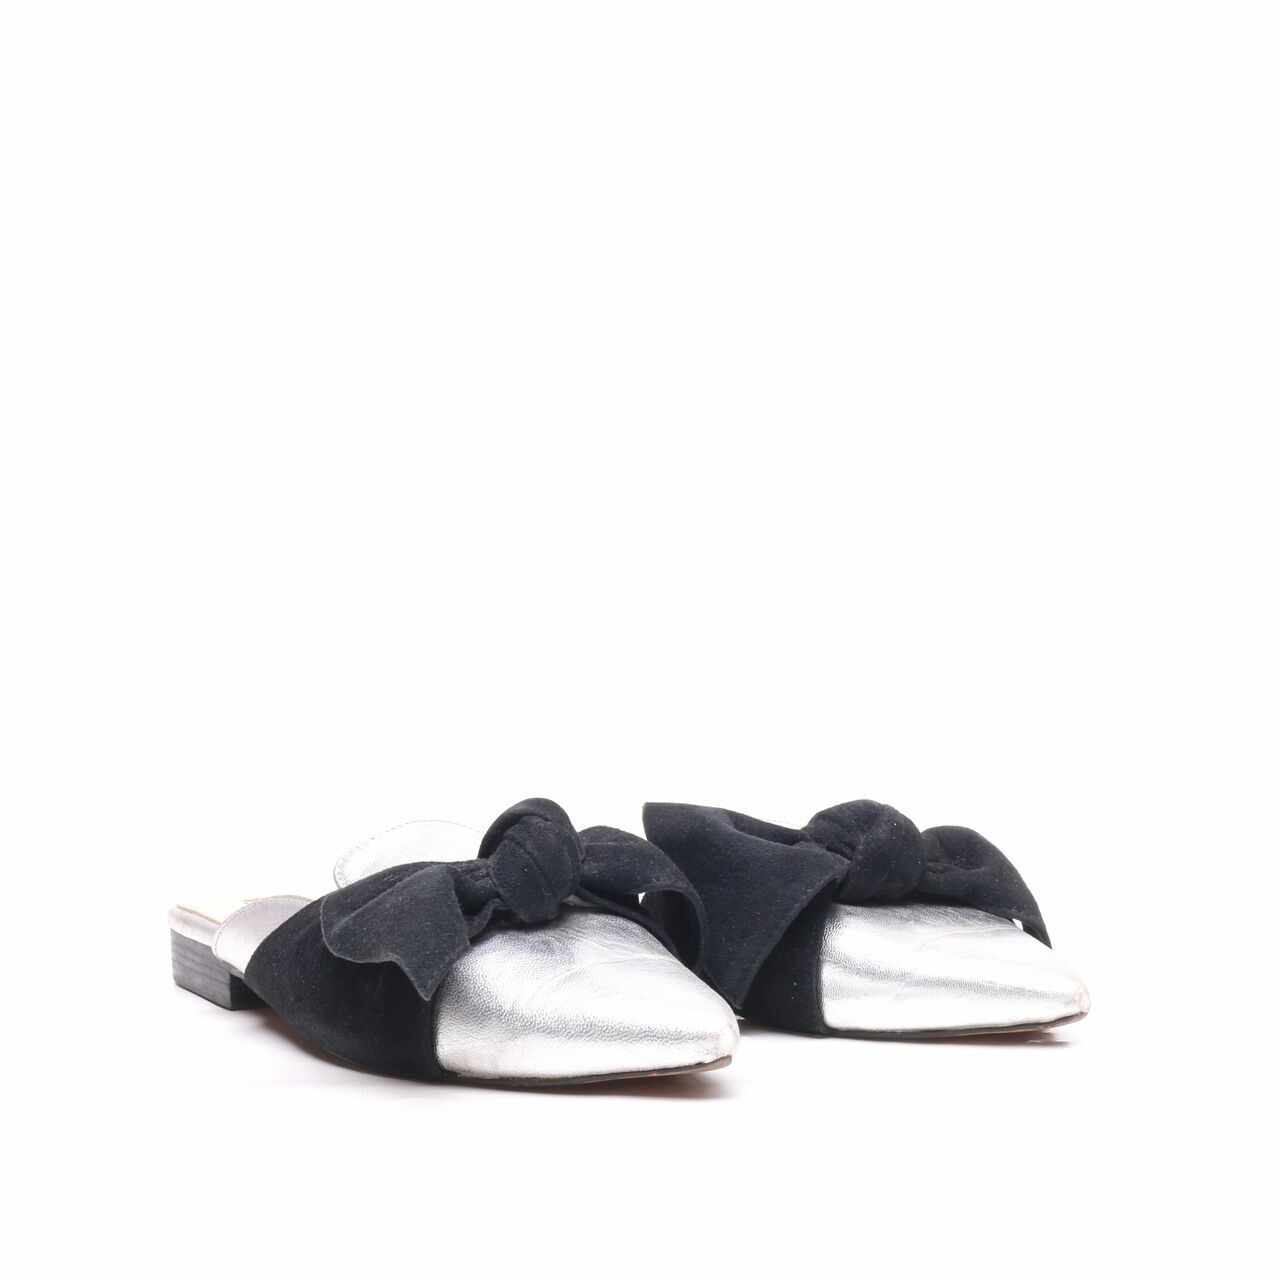 Jasmine Elizabeth Silver & Black Sandals